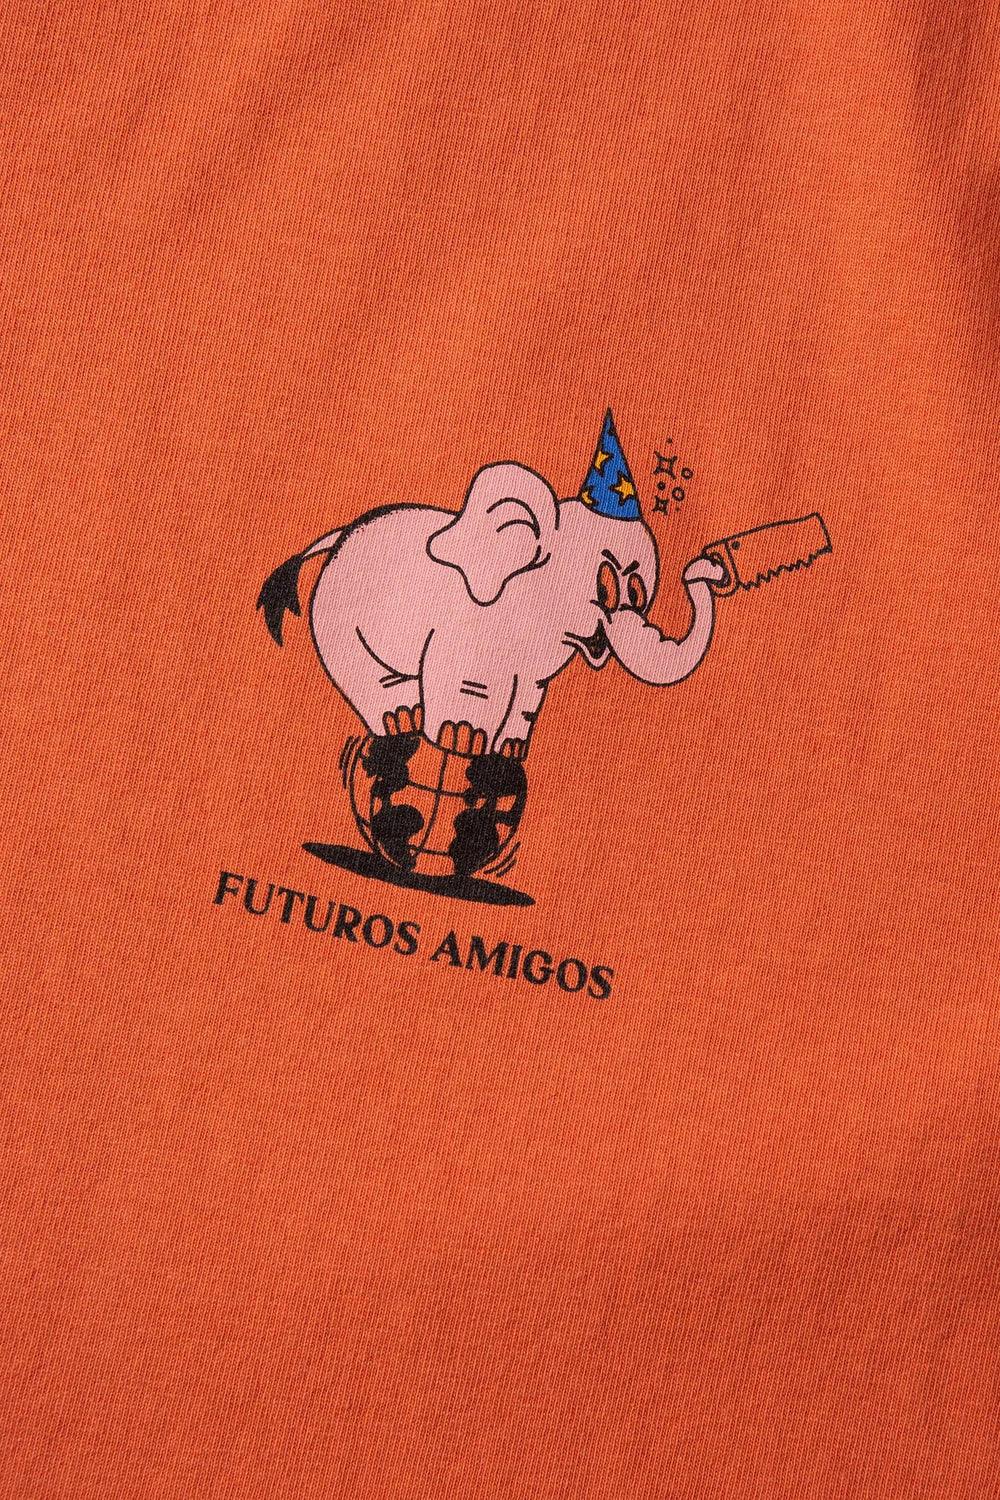 Camiseta Edmmond de Hombre Manga Corta Futuros Amigos Plain Orange - ECRU